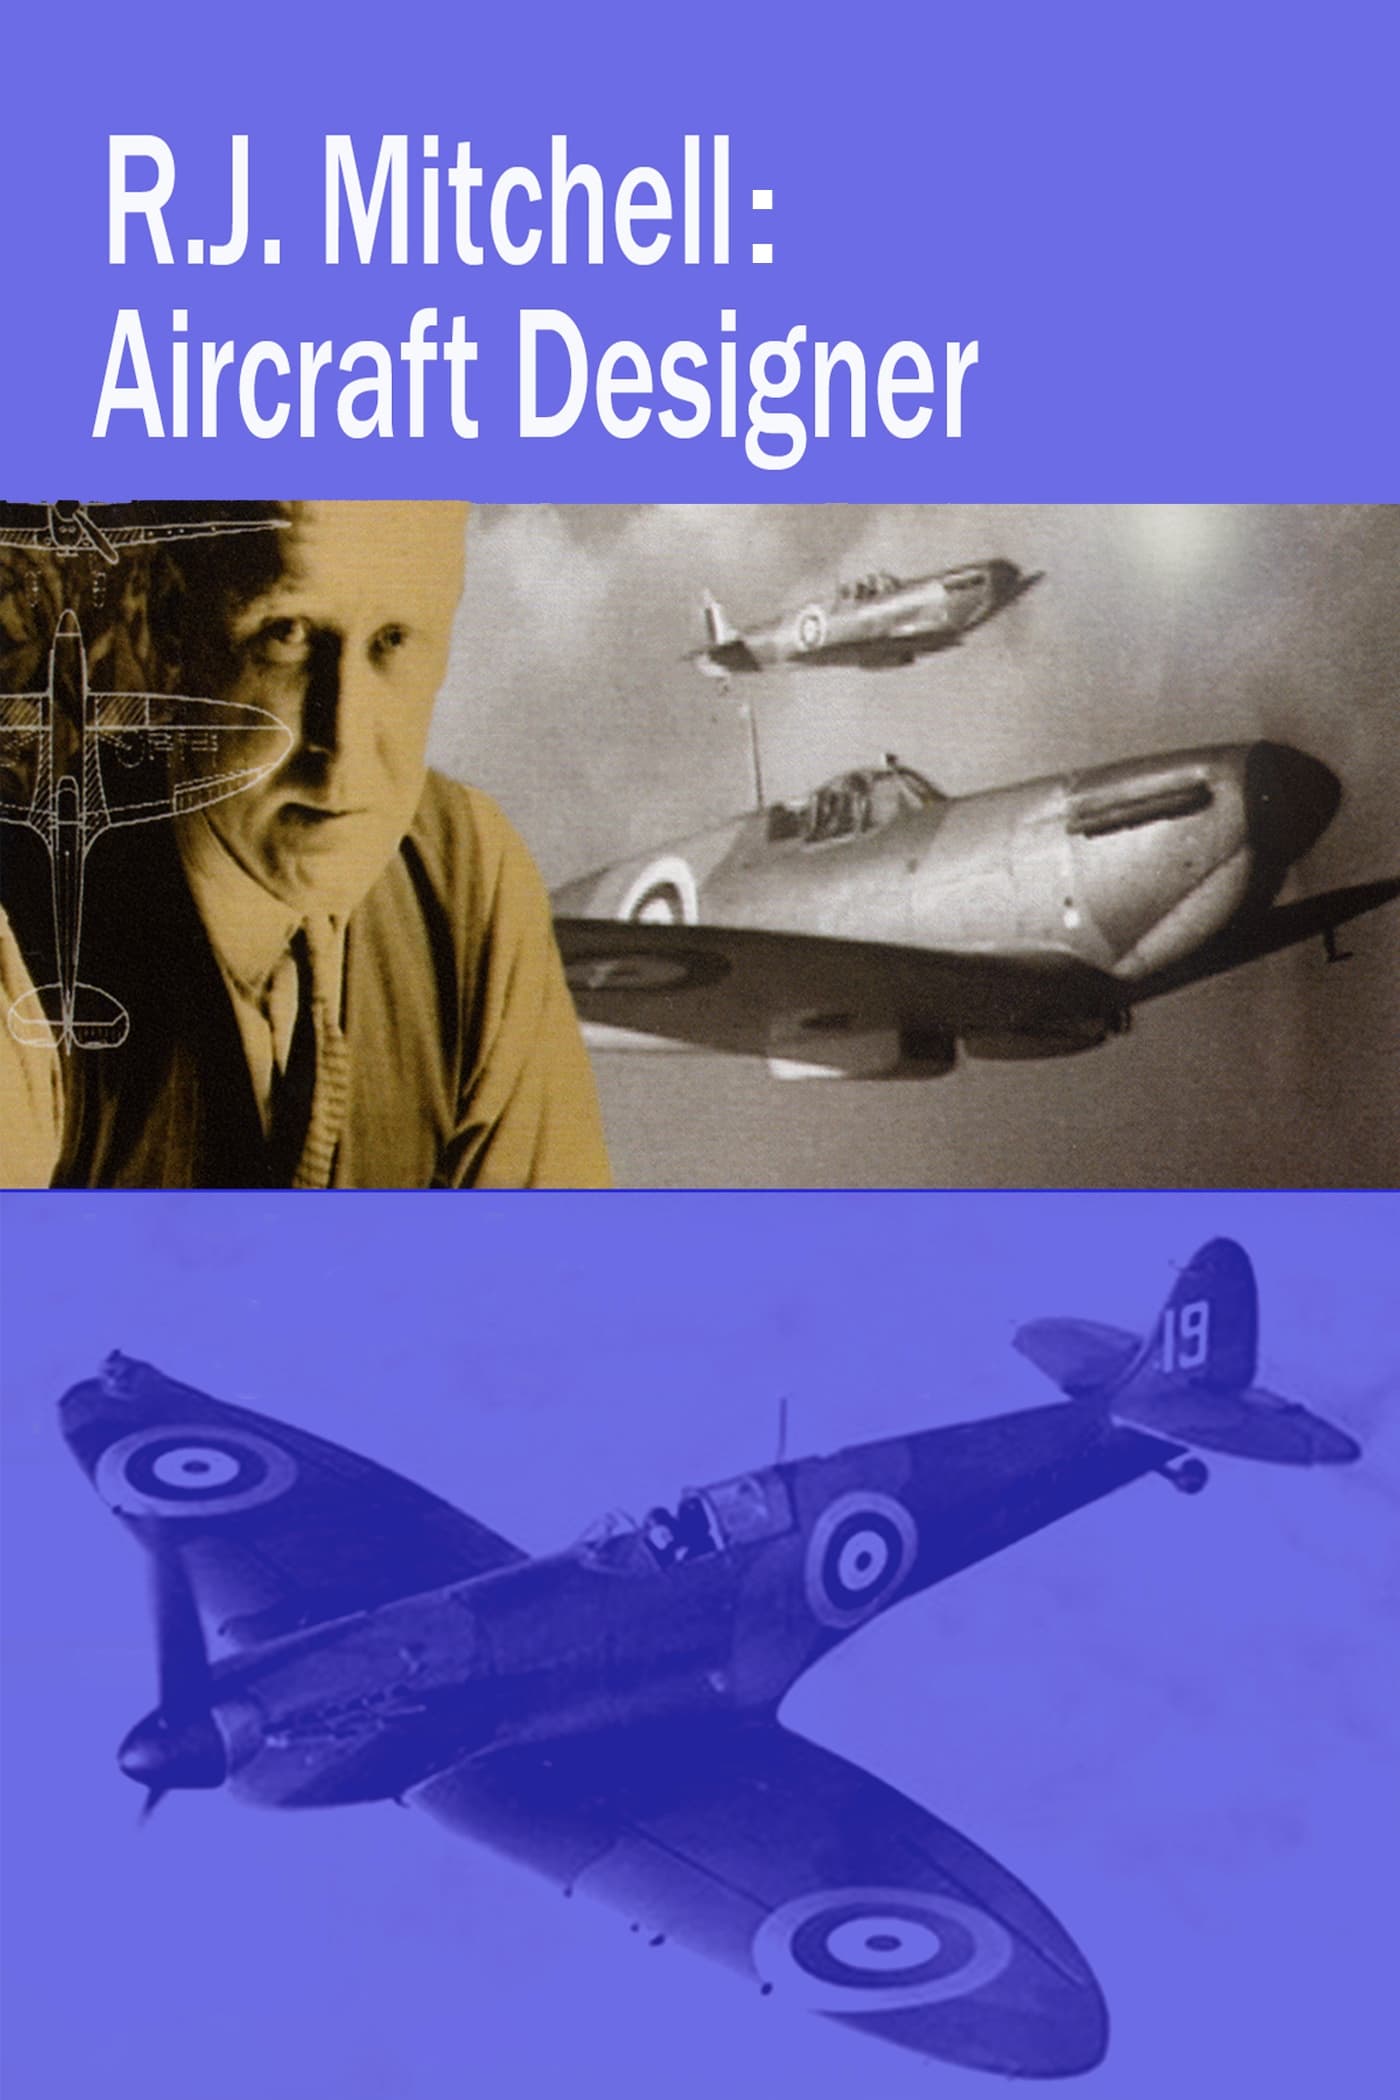 RJ Mitchell Aircraft Designer